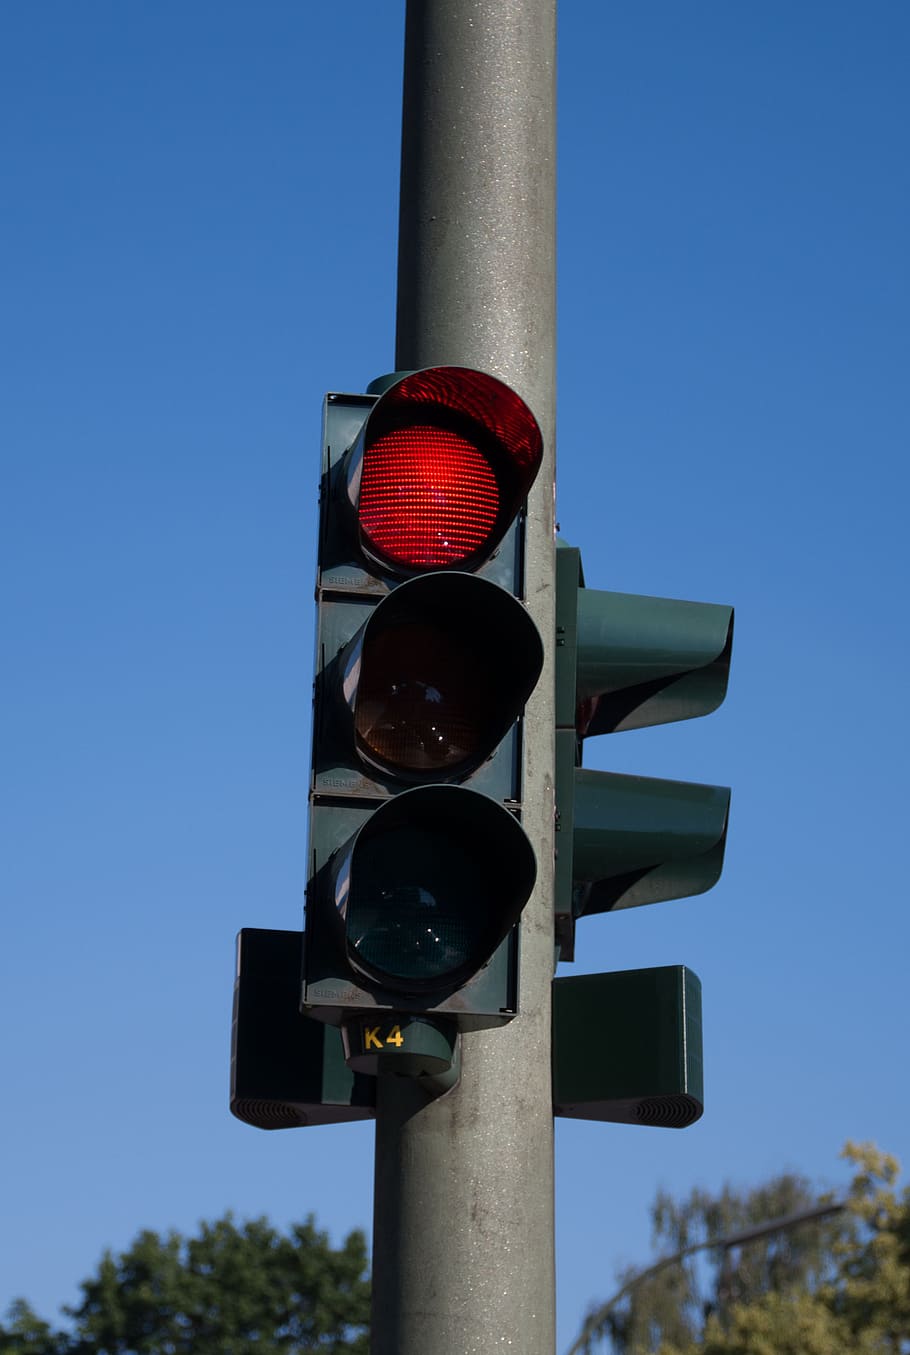 semaphore, traffic lights, stop, lamp, caution, red light, traffic control